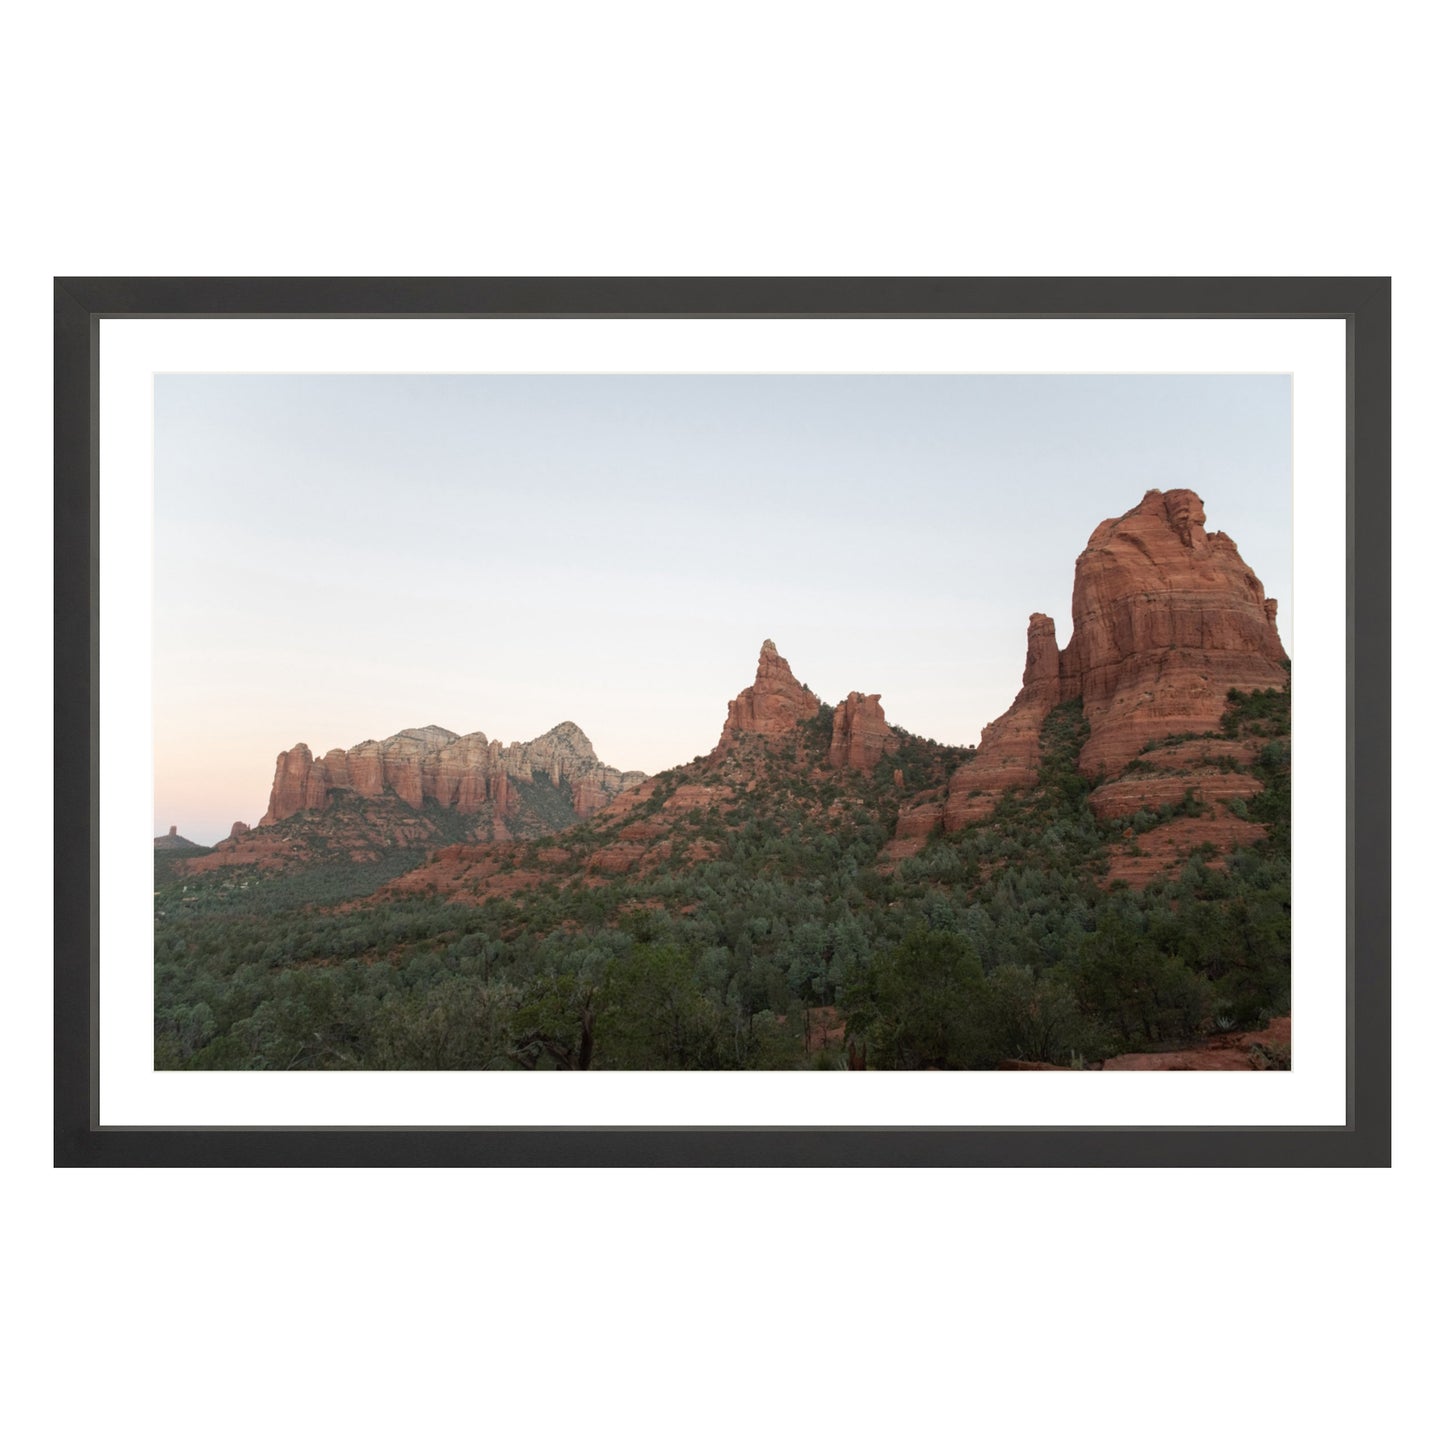 Photograph of Boynton Canyon in Sedona Arizona framed in black with white mat